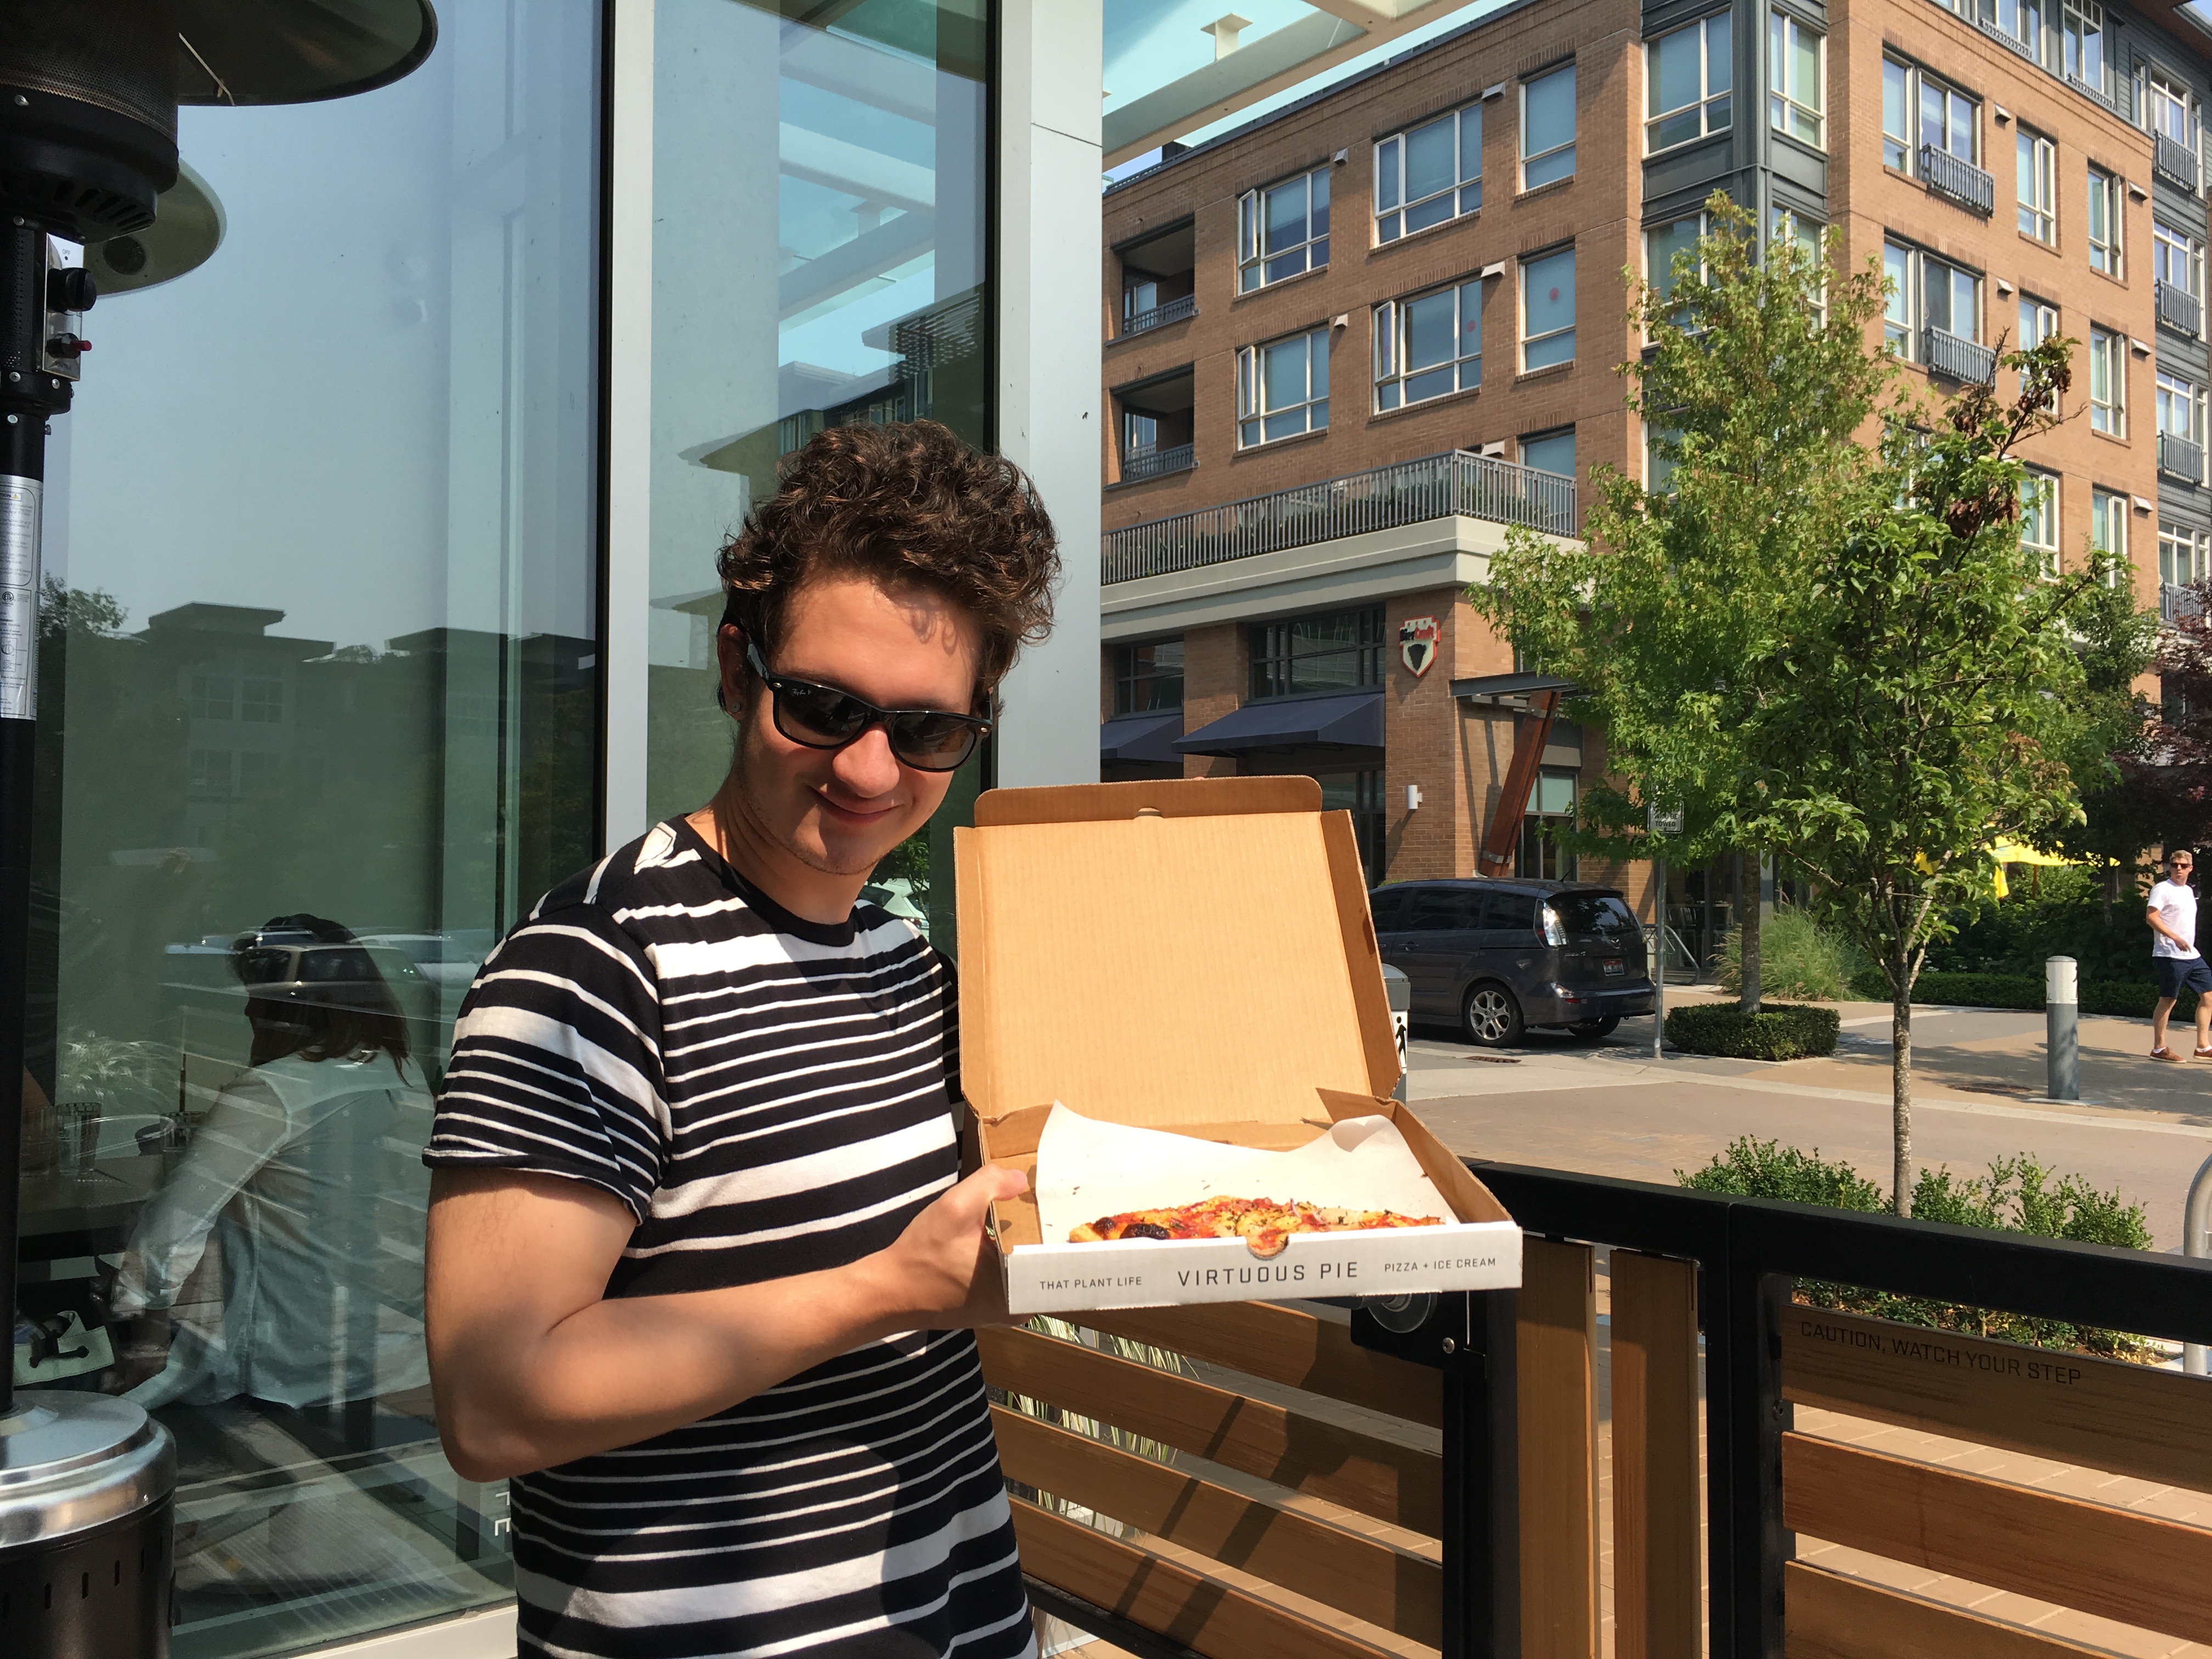 derrick holding a pizza